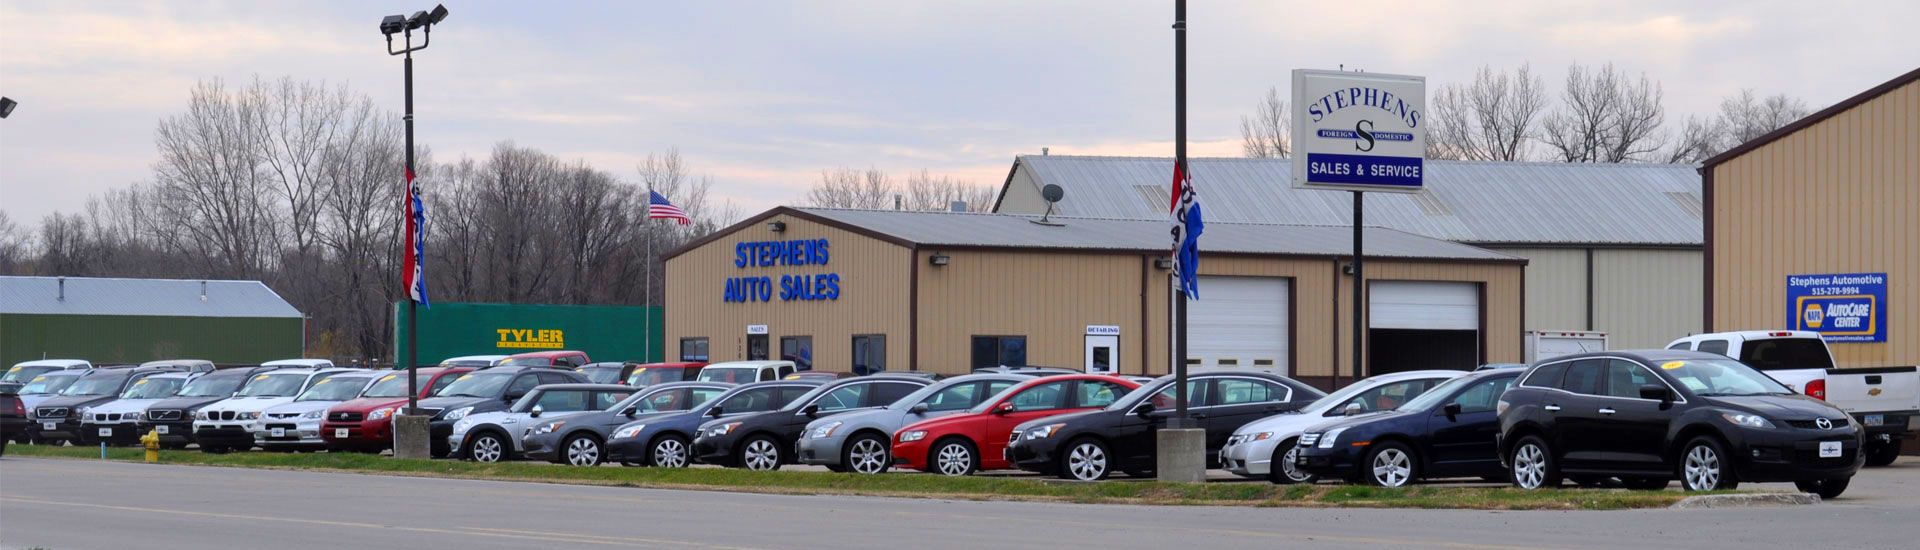 Stephens Automotive Sales Used Cars Des Moines, Iowa